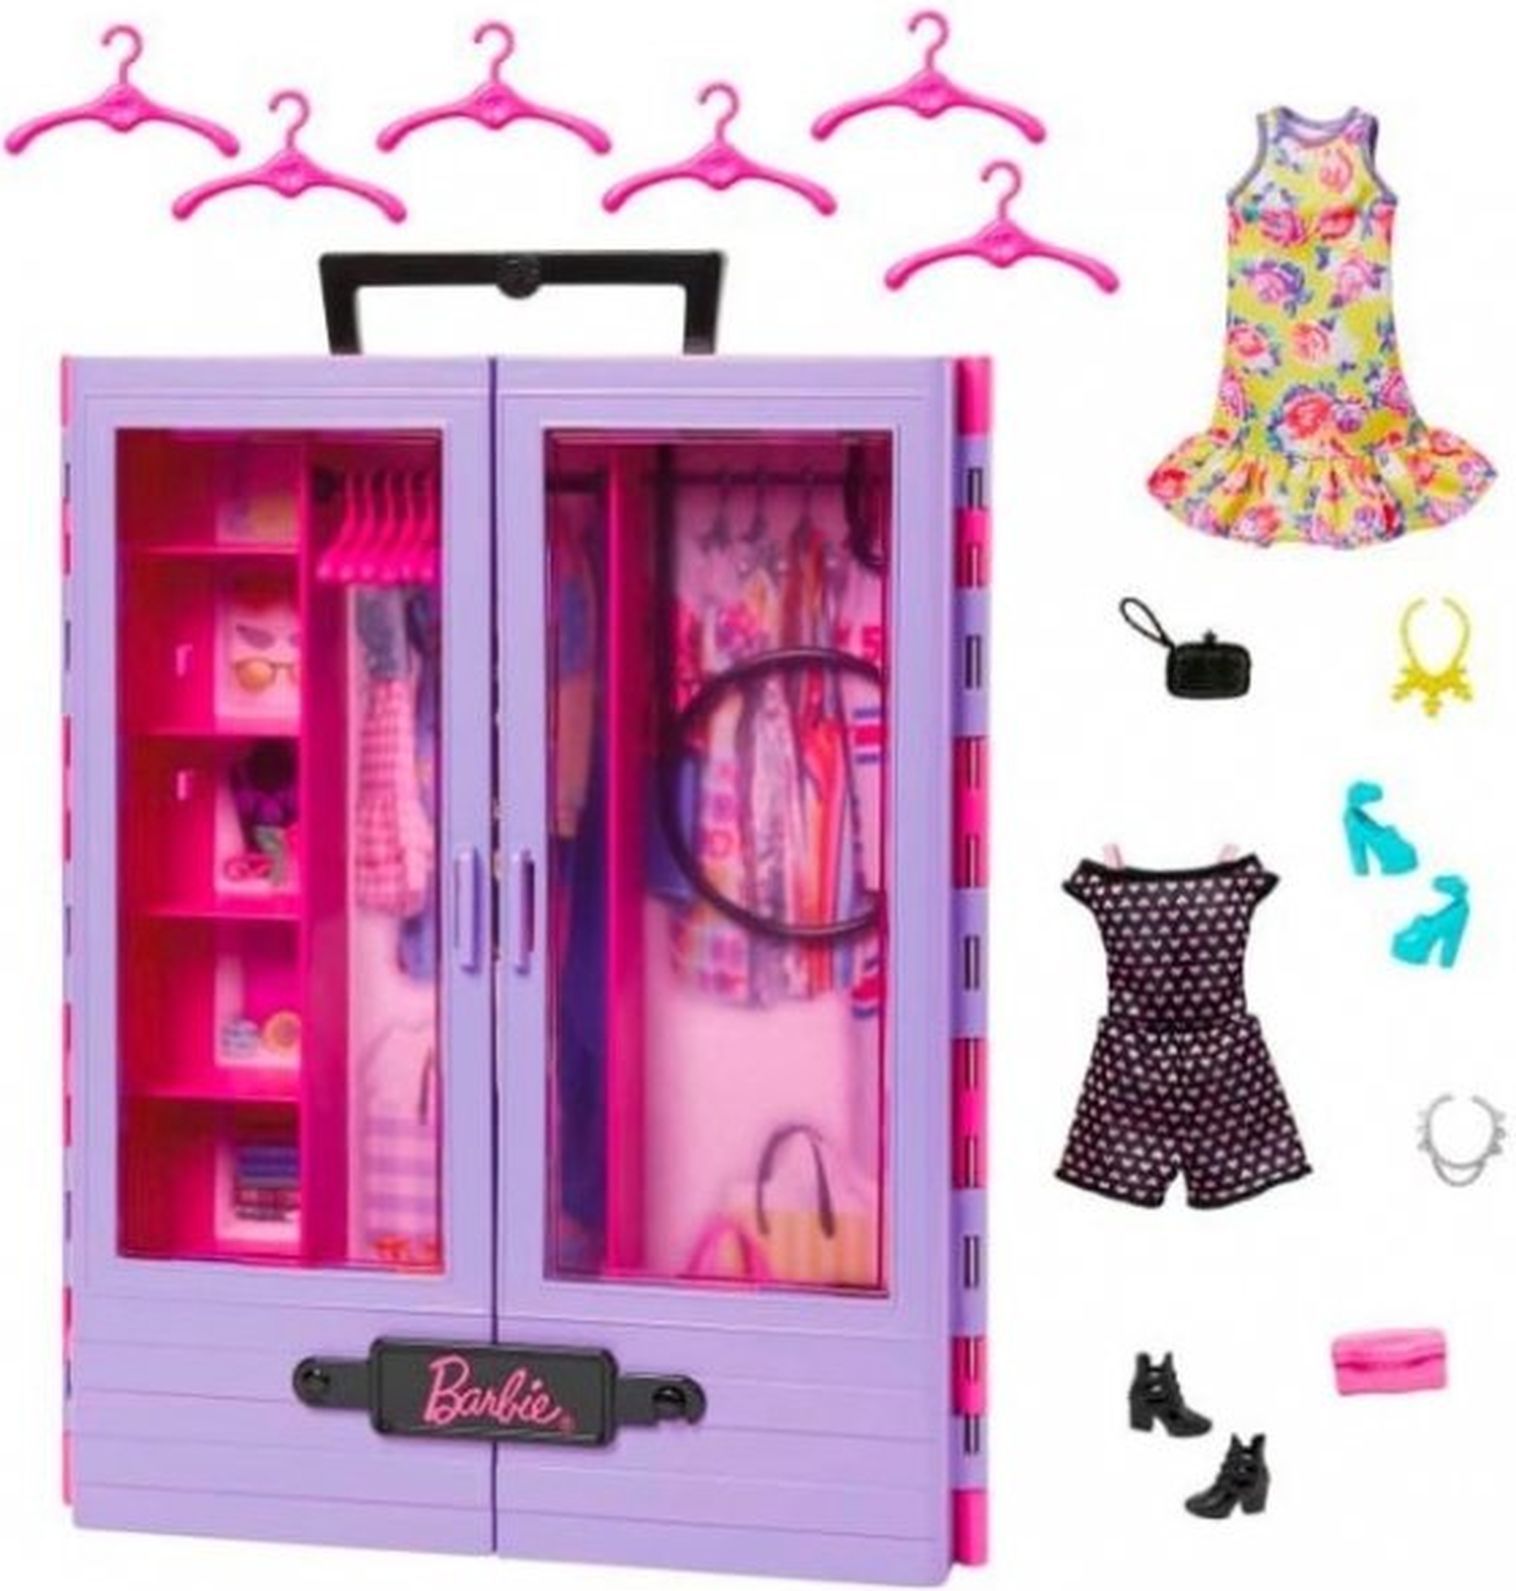 Гардероб барби. Barbie Fashionistas Ultimate Closet Accessory шкаф. Набор Barbie шкаф для одежды, x4833. Hdosipe Barbie шкаф. Шкафчик для Барби.